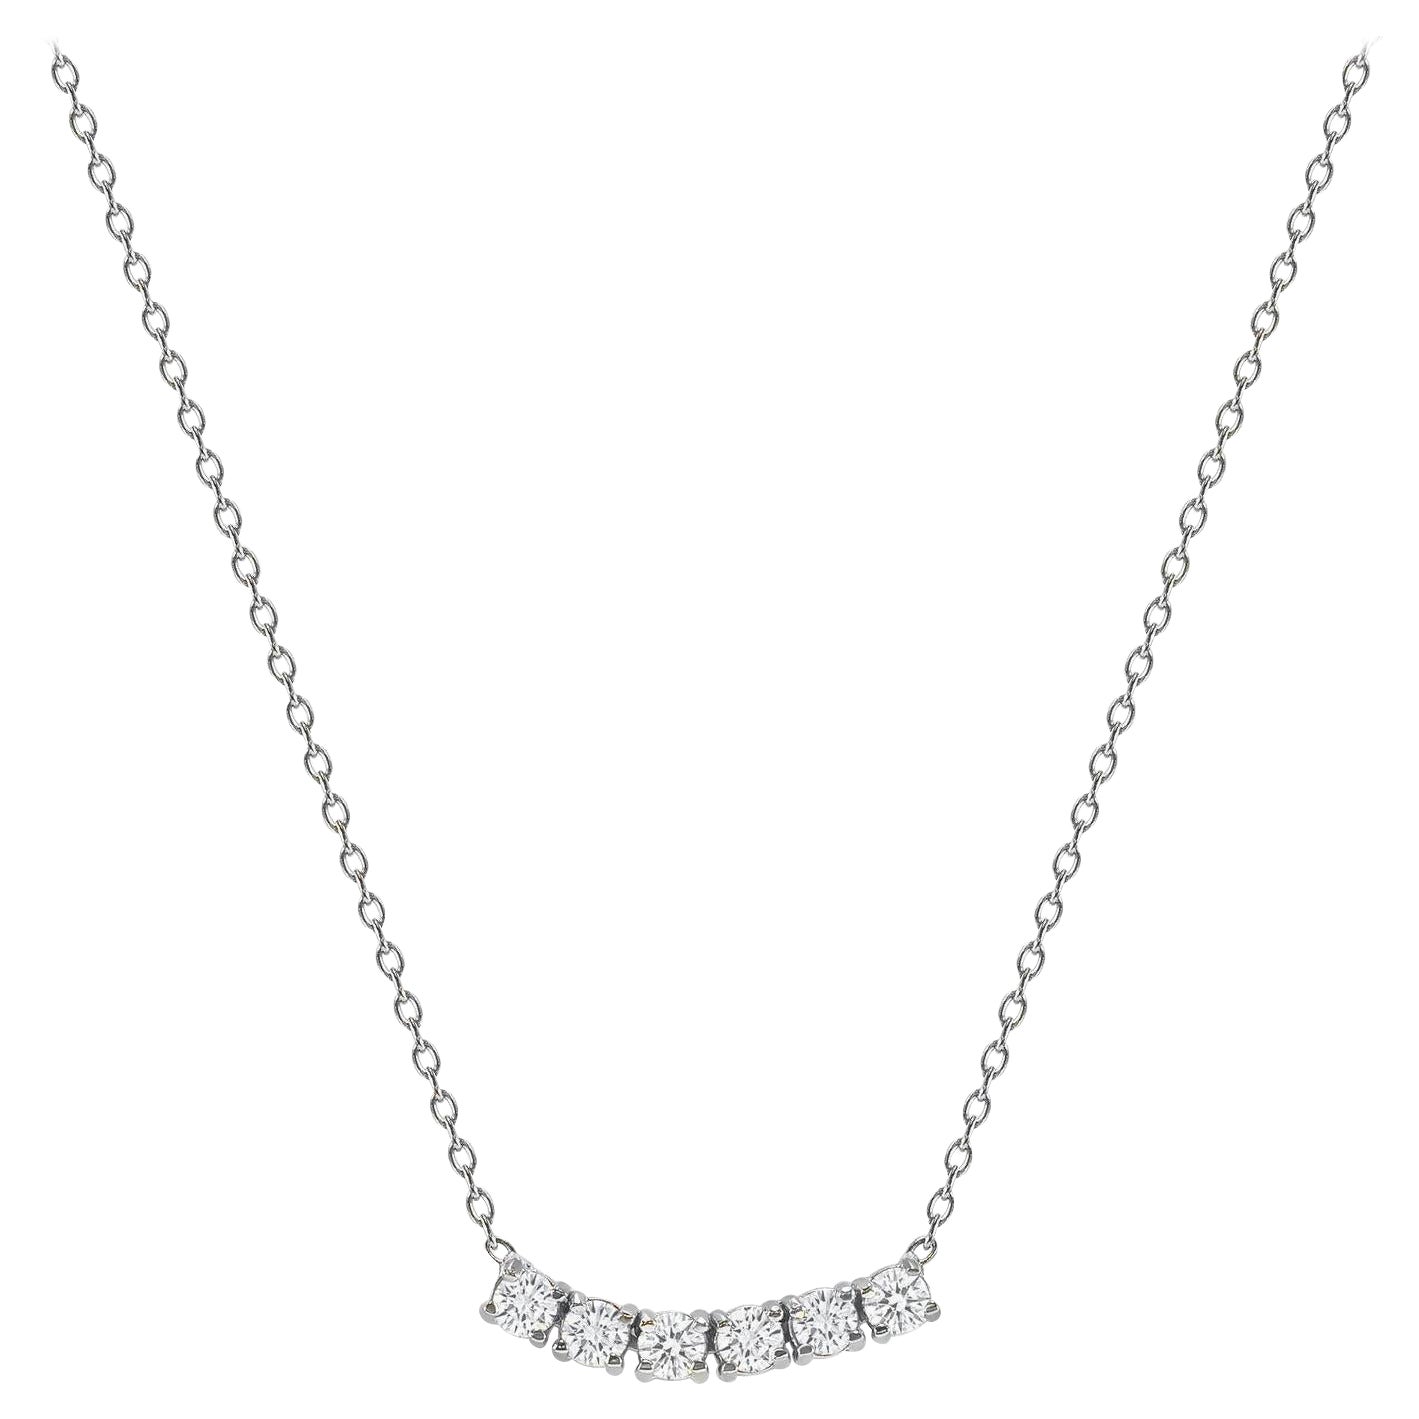 14k White Gold 2 Carat Petite Round Diamond Six Stone Curved Necklace